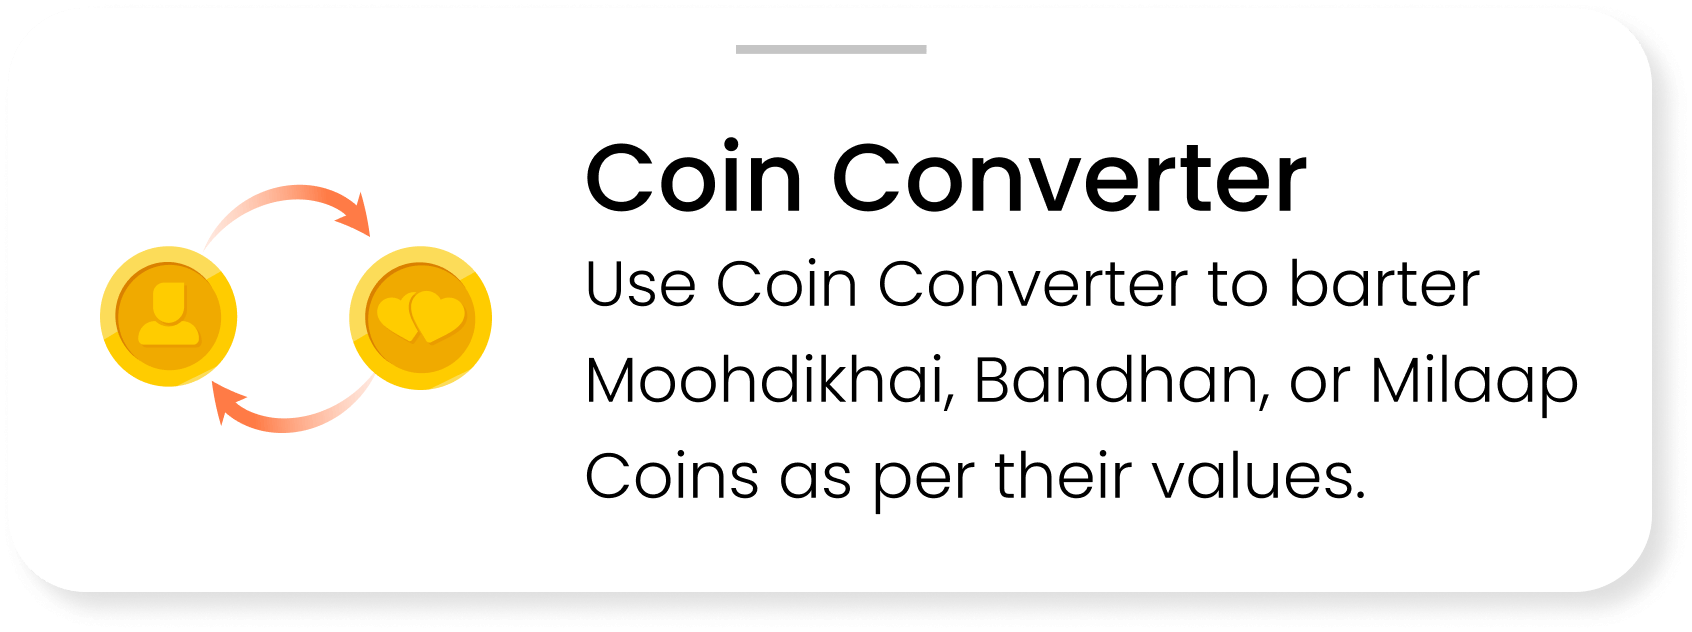 Coin Converter Feature